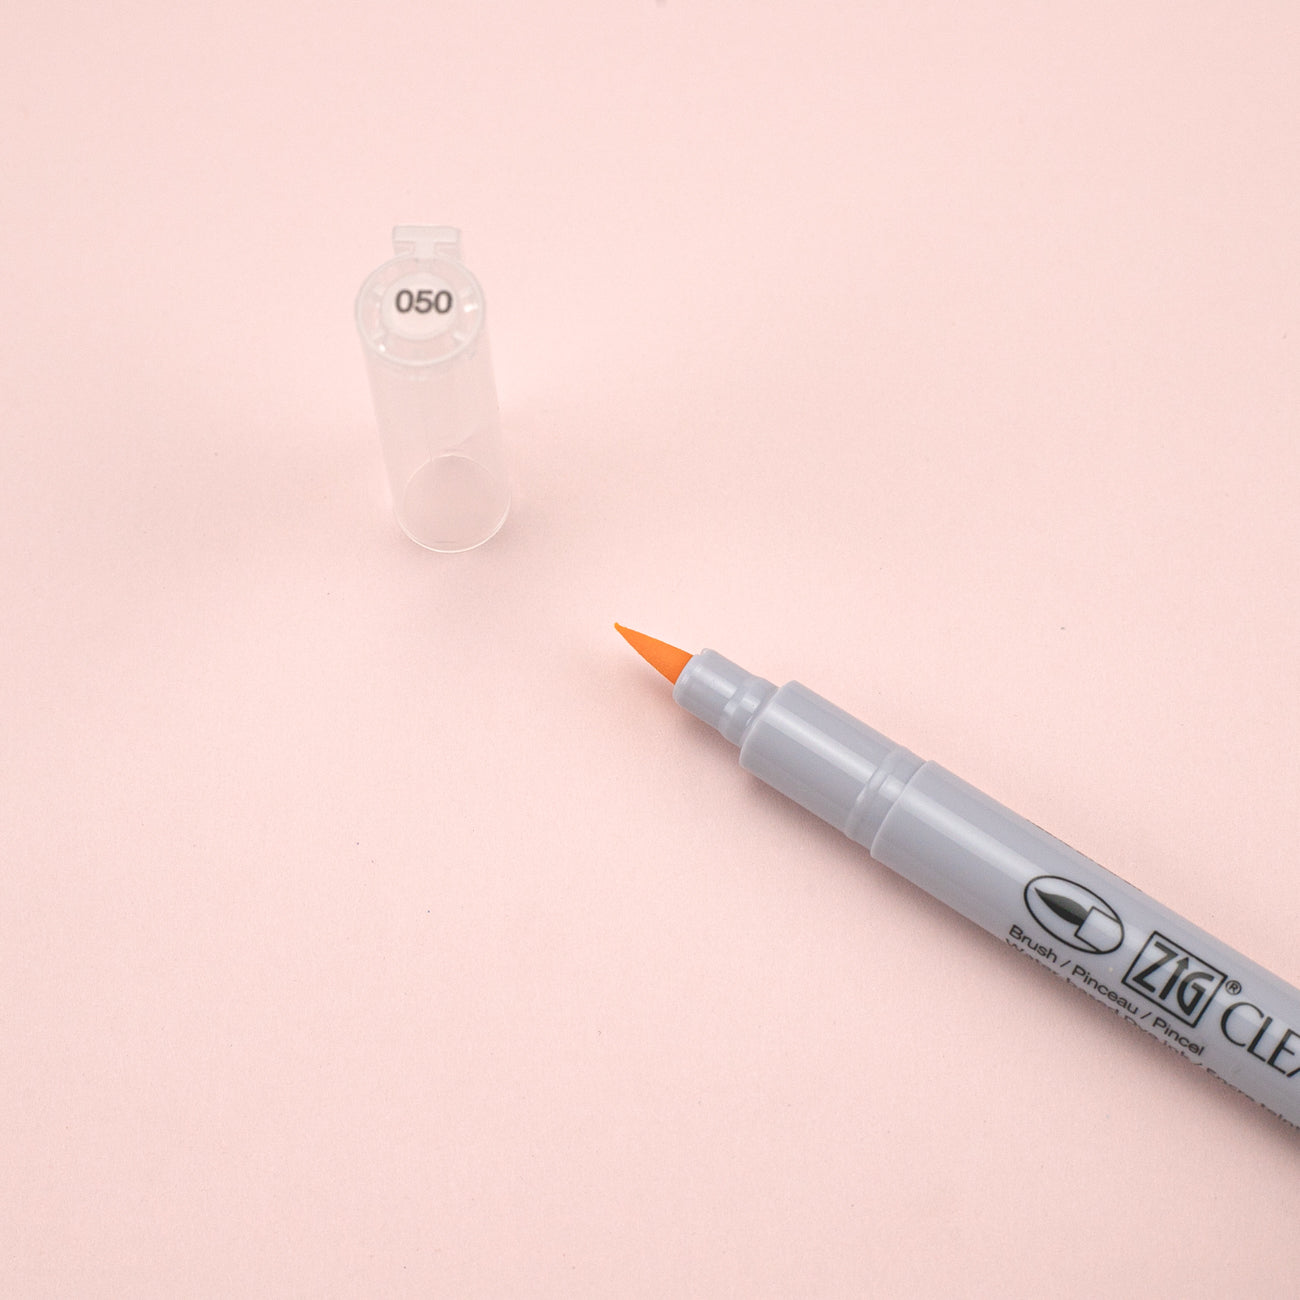 Kuretake ZIG Clean Color FB Felt Tip Brush Pen - Yellow - 050